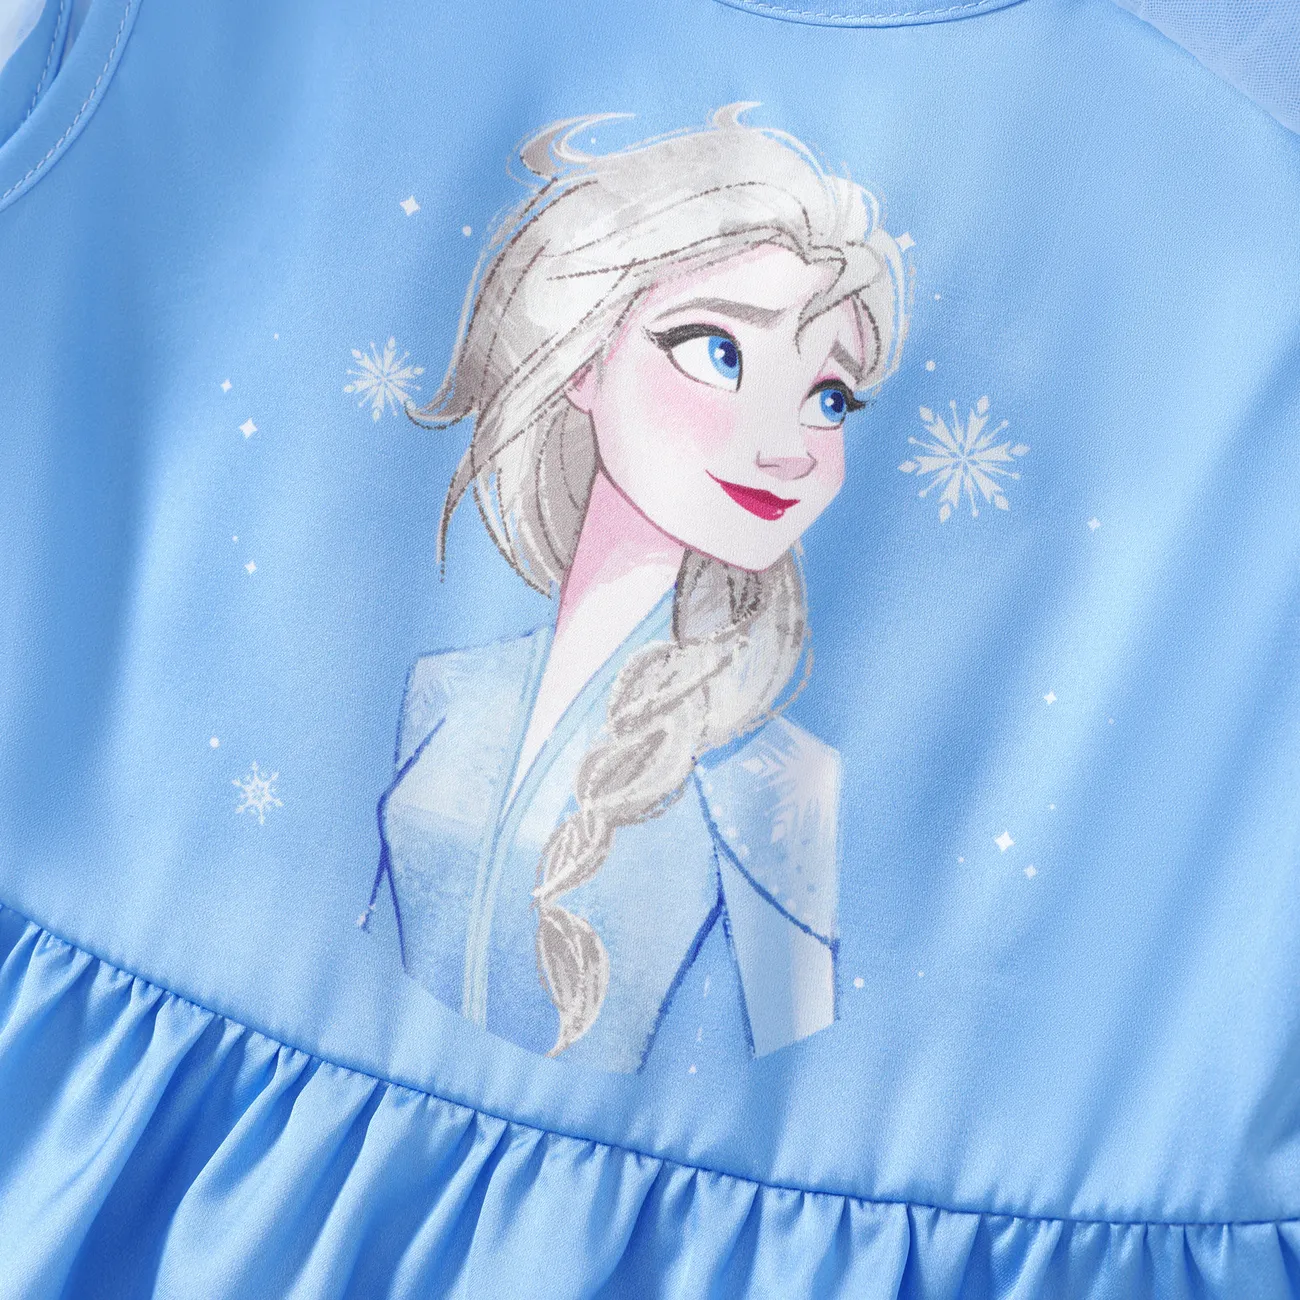 Disney Frozen Toddler Girls Elsa 1pc Character Gardient Print Mesh Cloak Dress  Blue big image 1